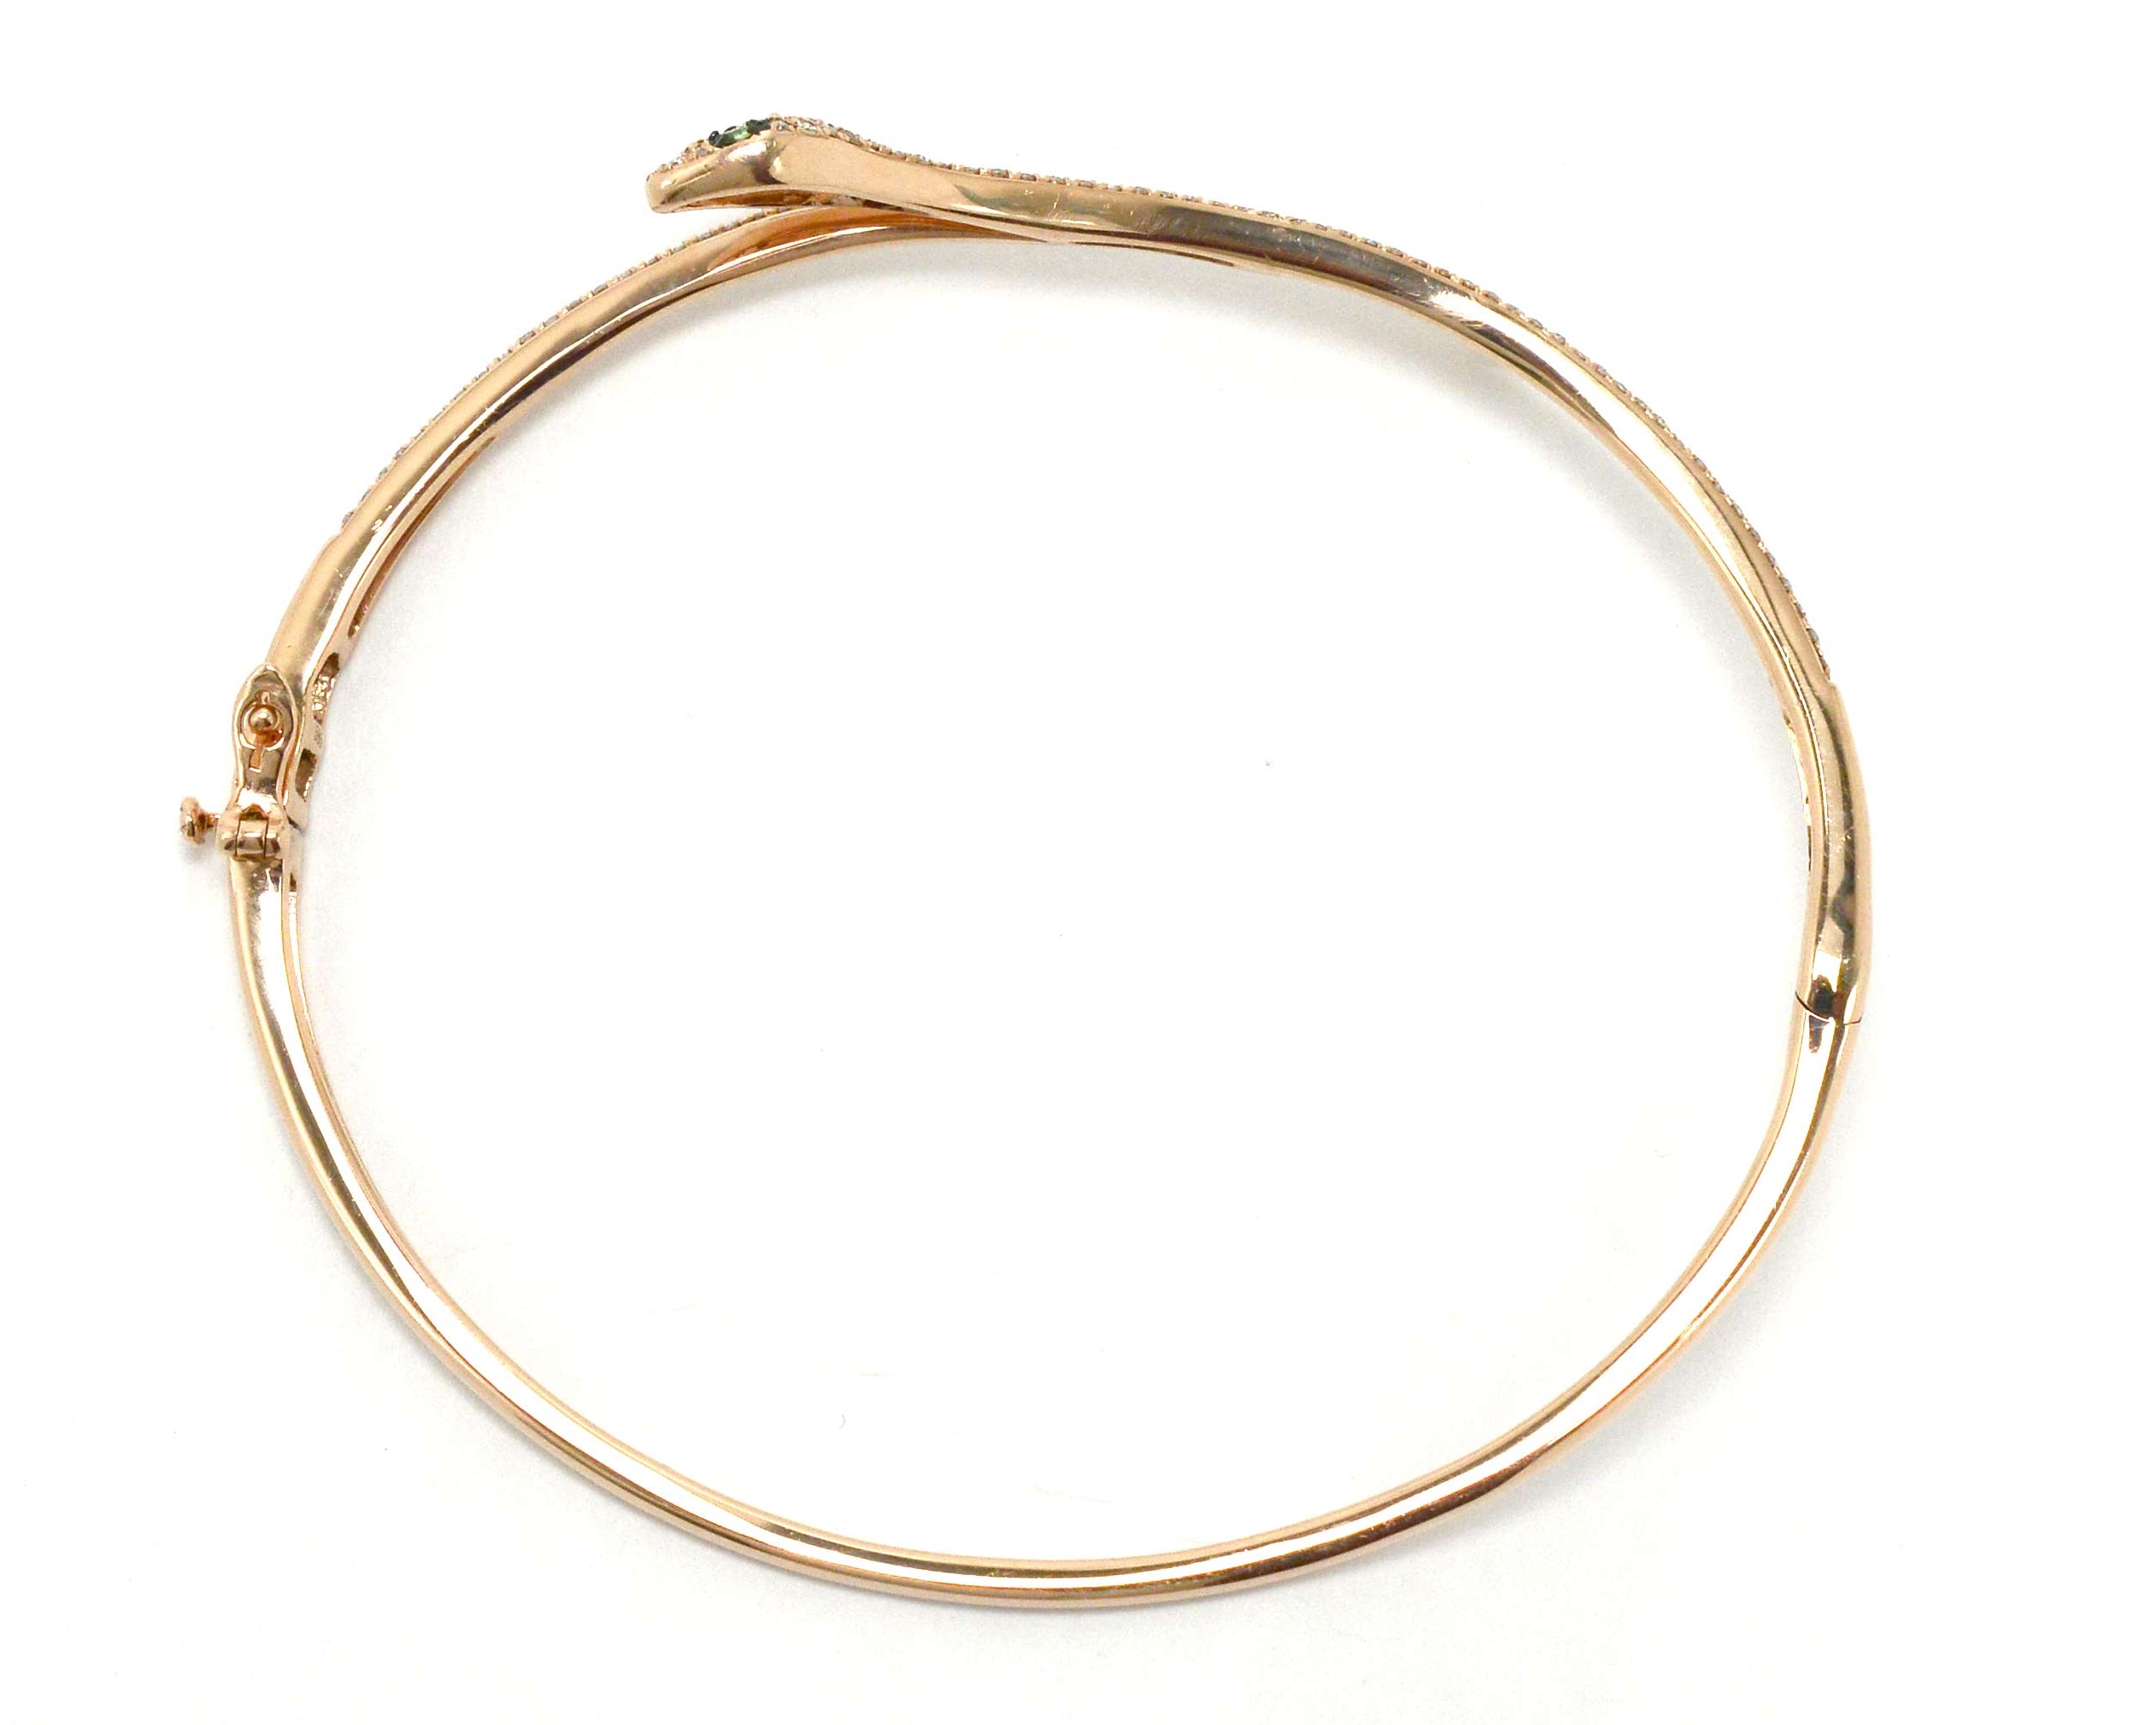 A hinged cuff gold snake bracelet.